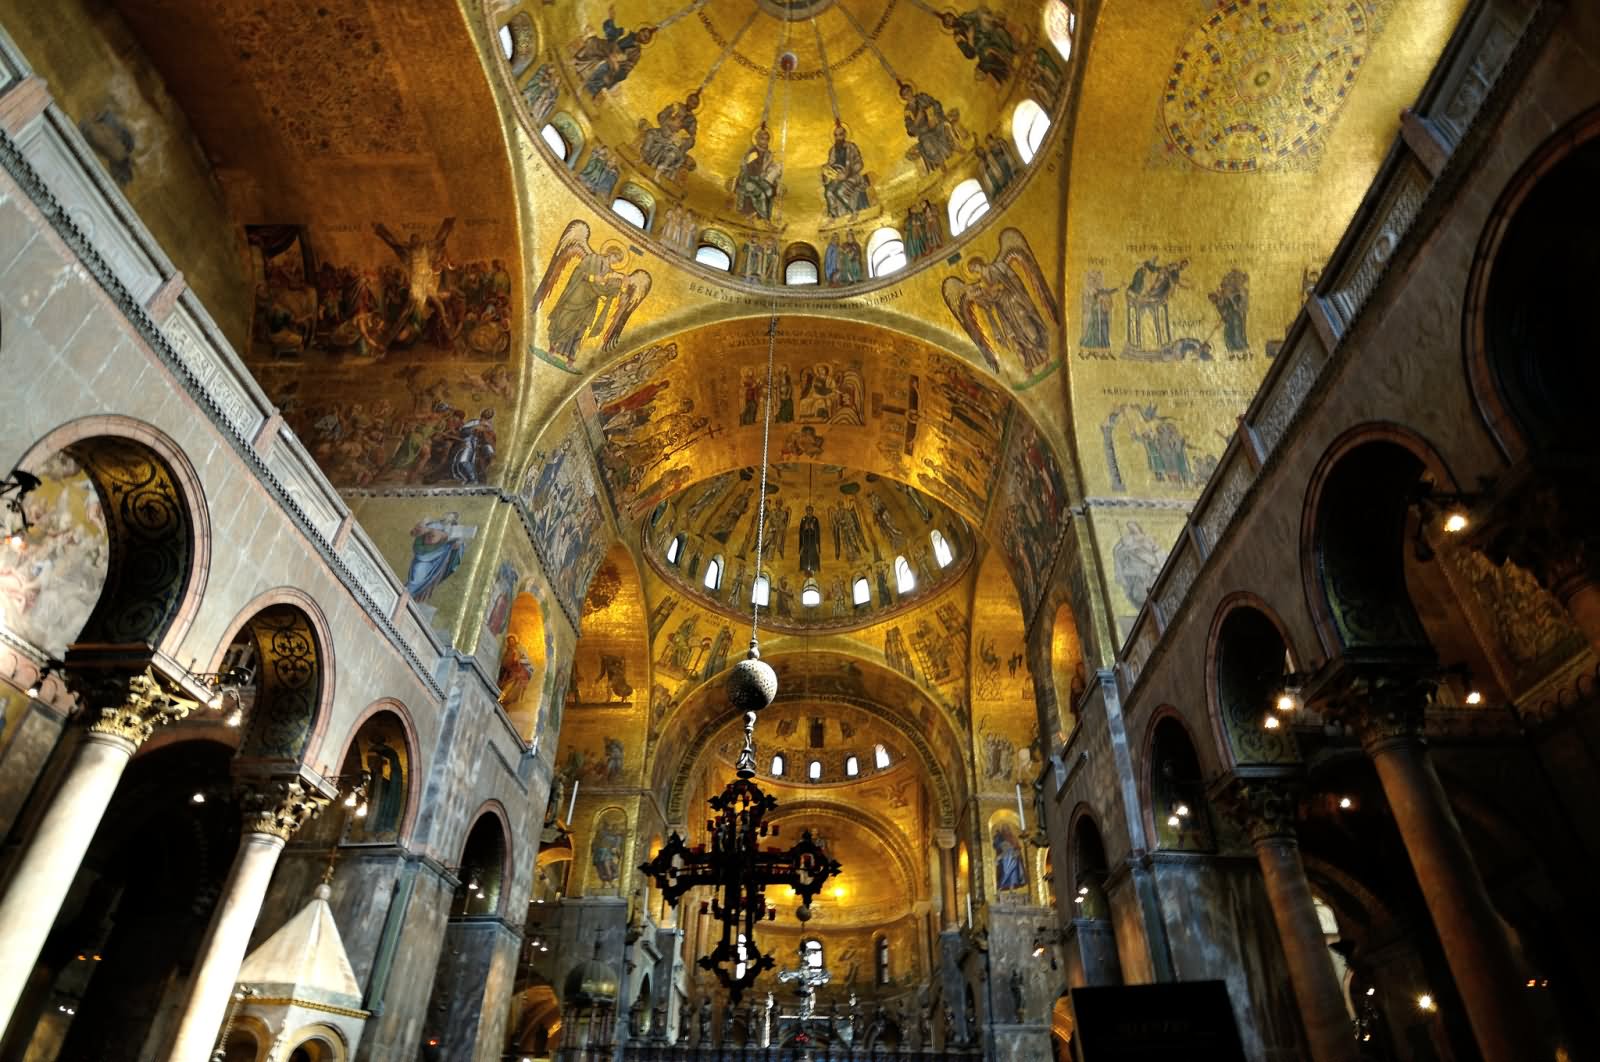 Inside Image Of St Mark's Basilica